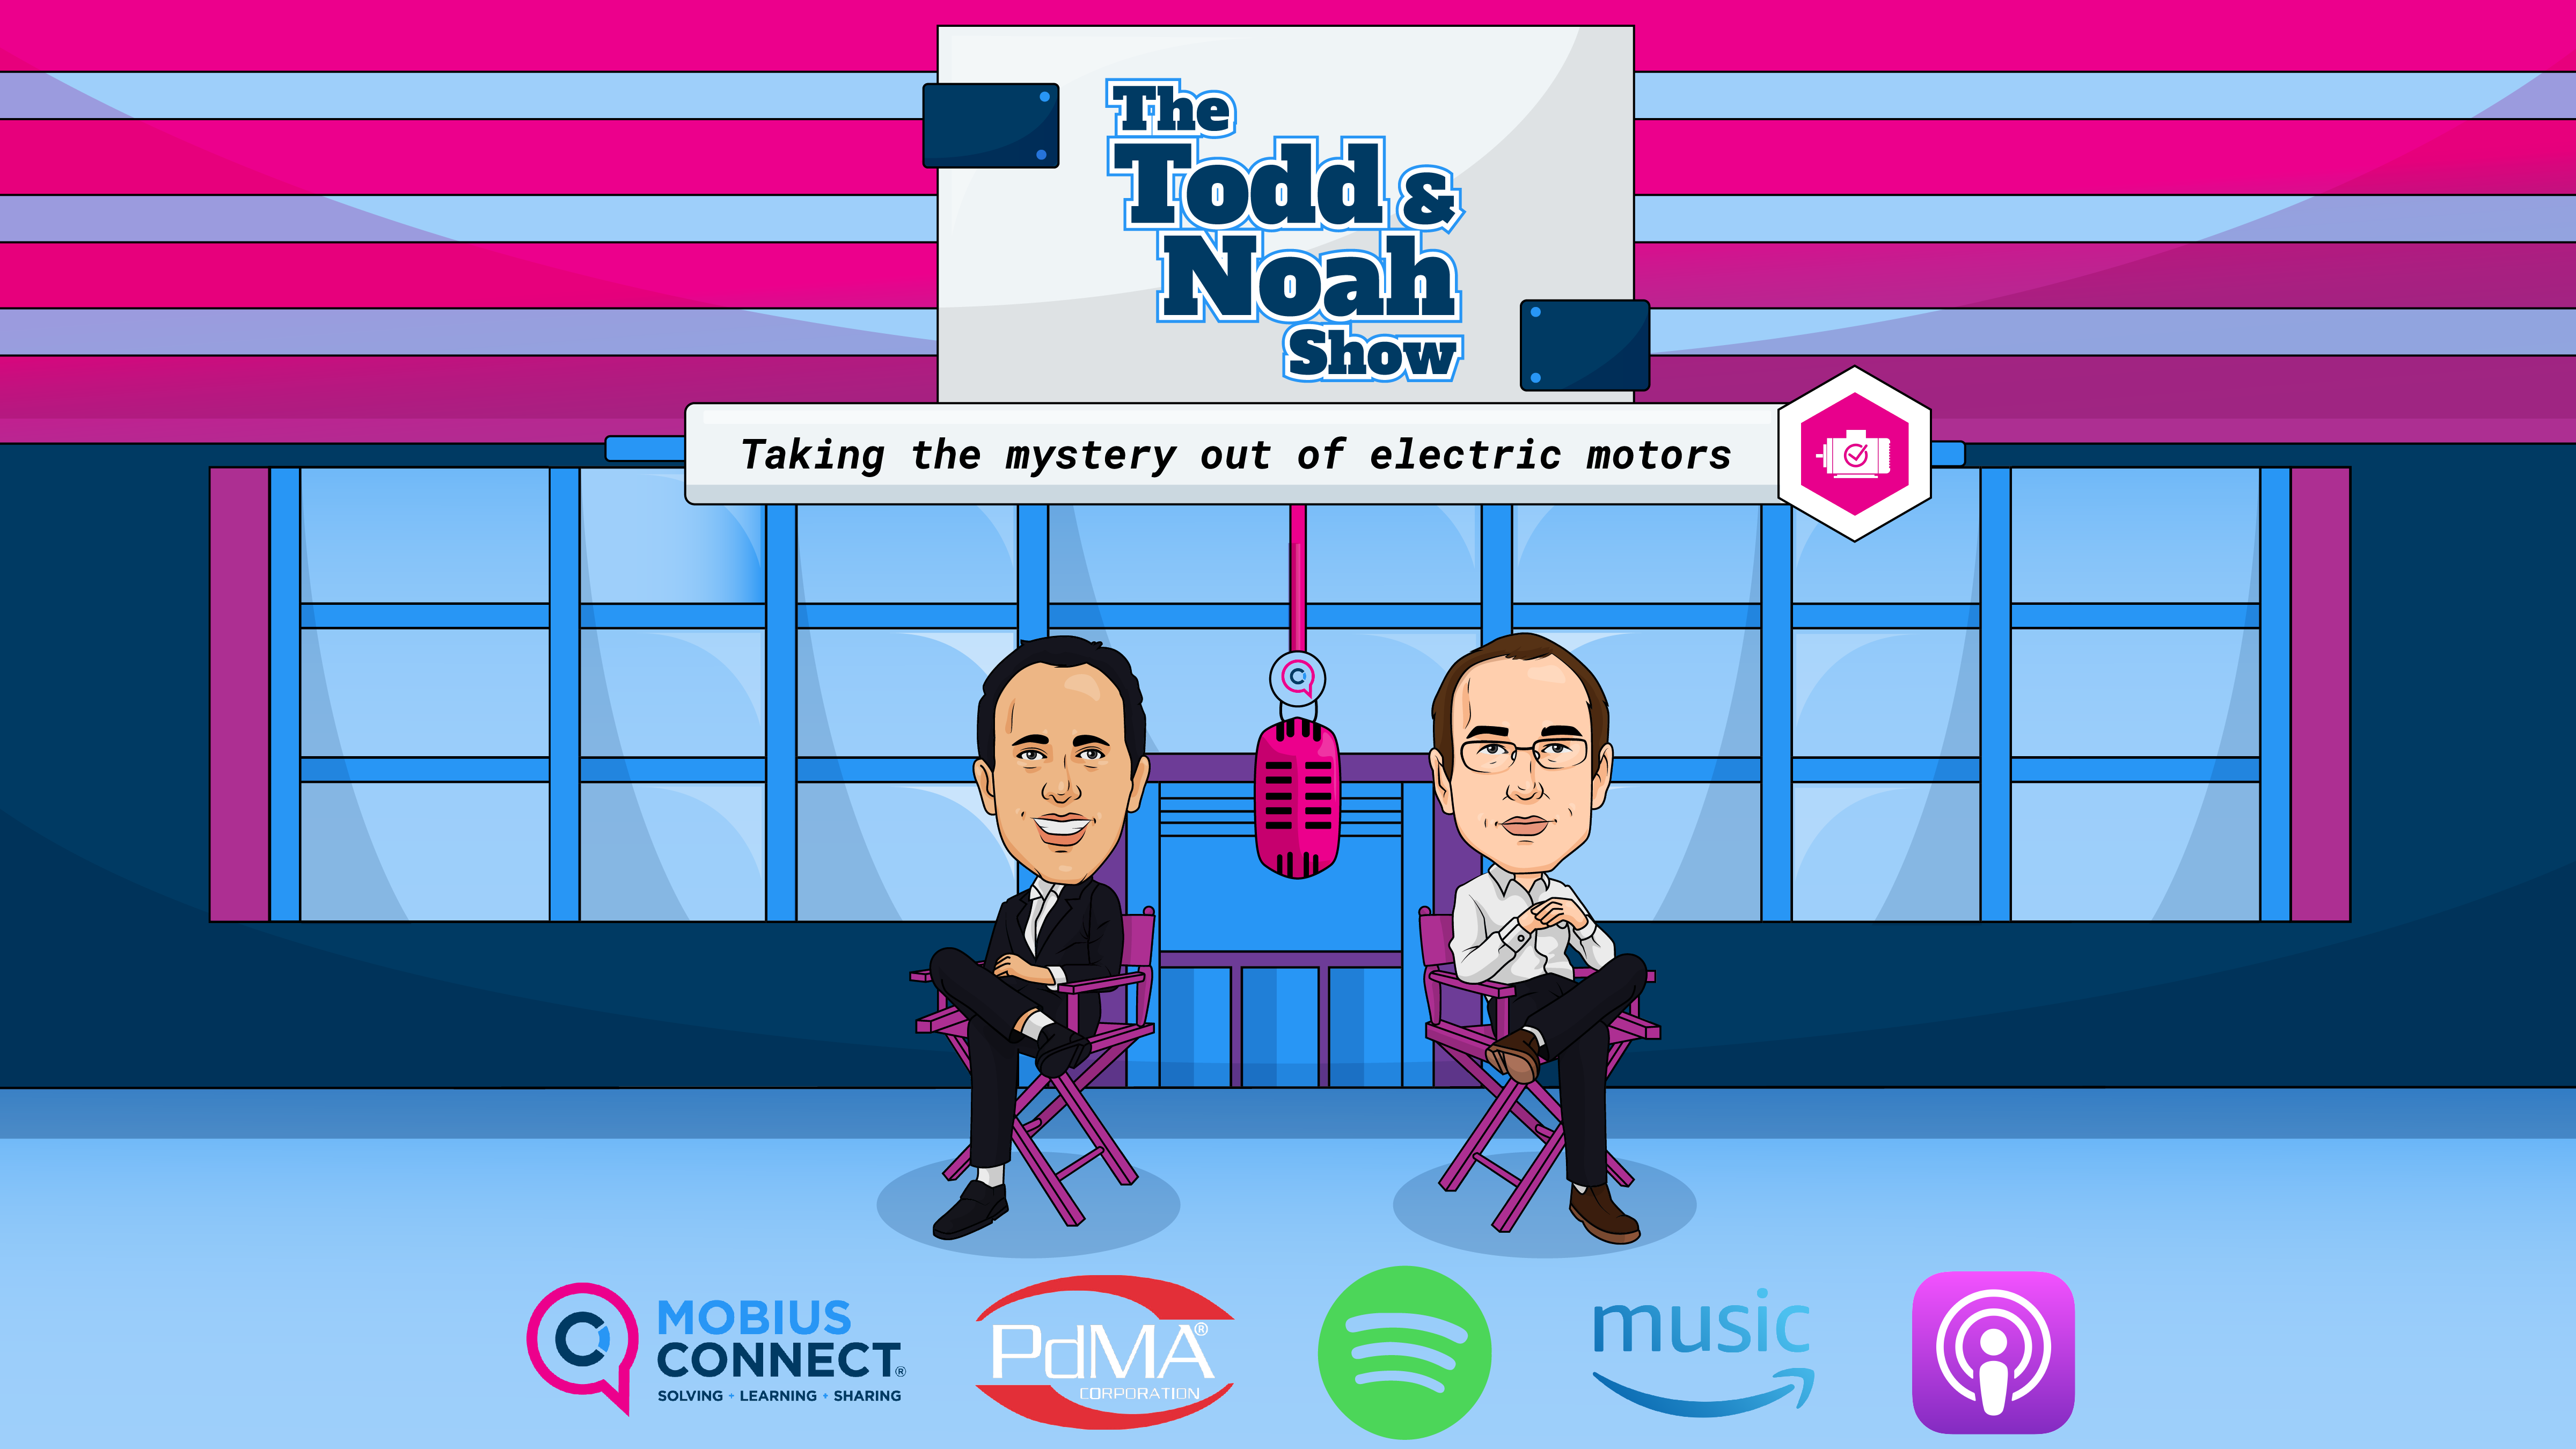 The Machine Train- Todd and Noah Show